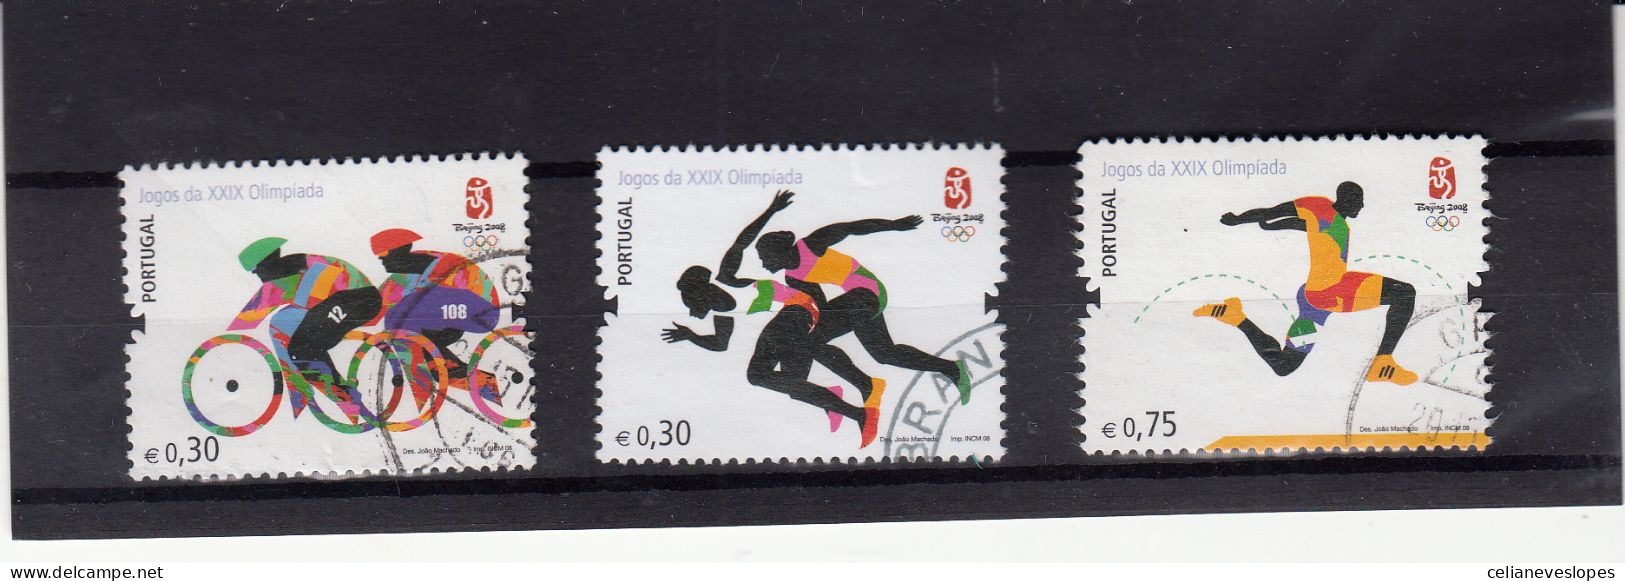 Portugal, Jogos Da XXIX Olimpiada, 2008, Mundifil Nº 3683 A 3685 Used - Used Stamps